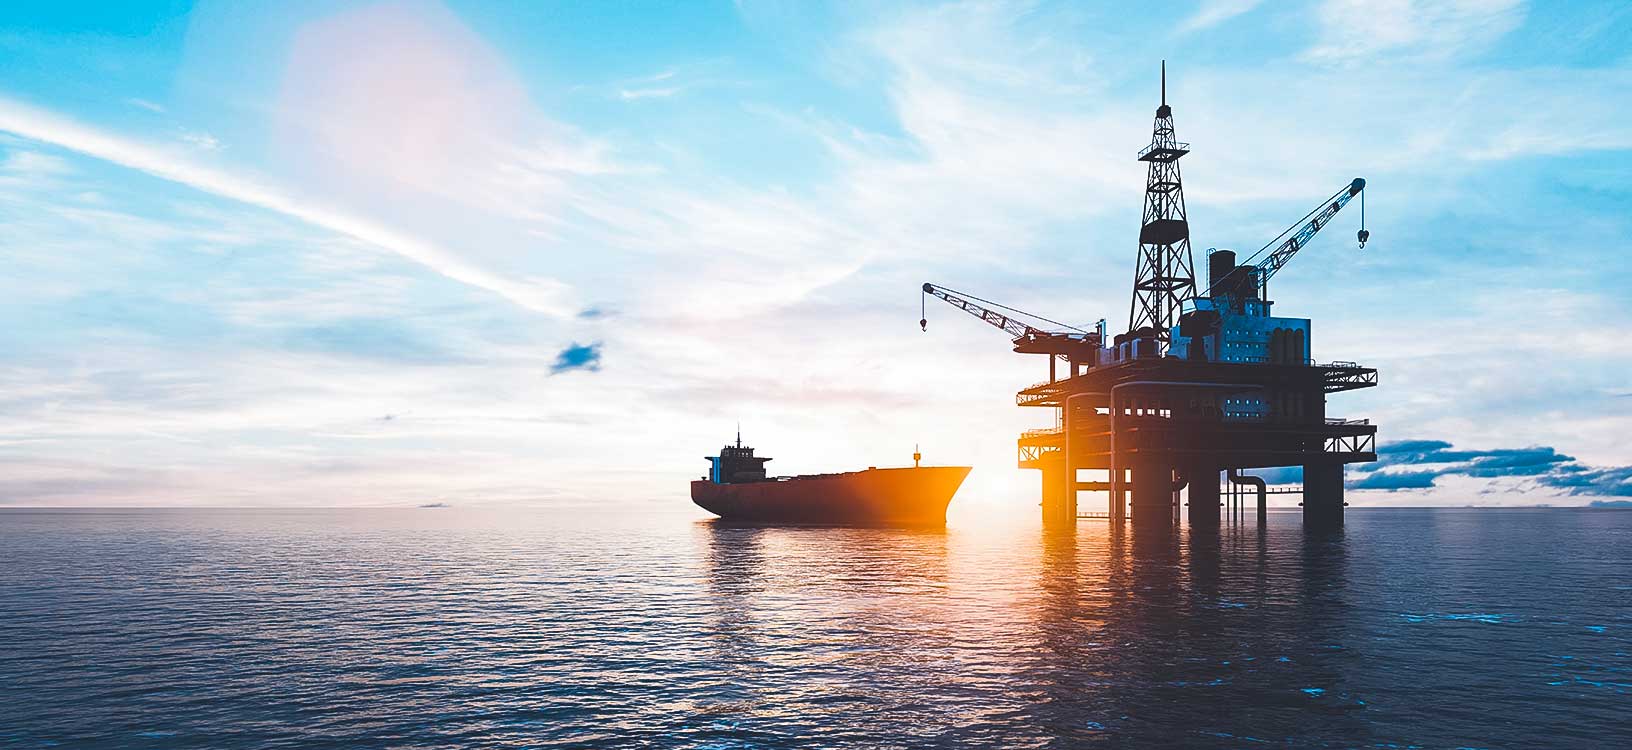 Oil platform on the ocean